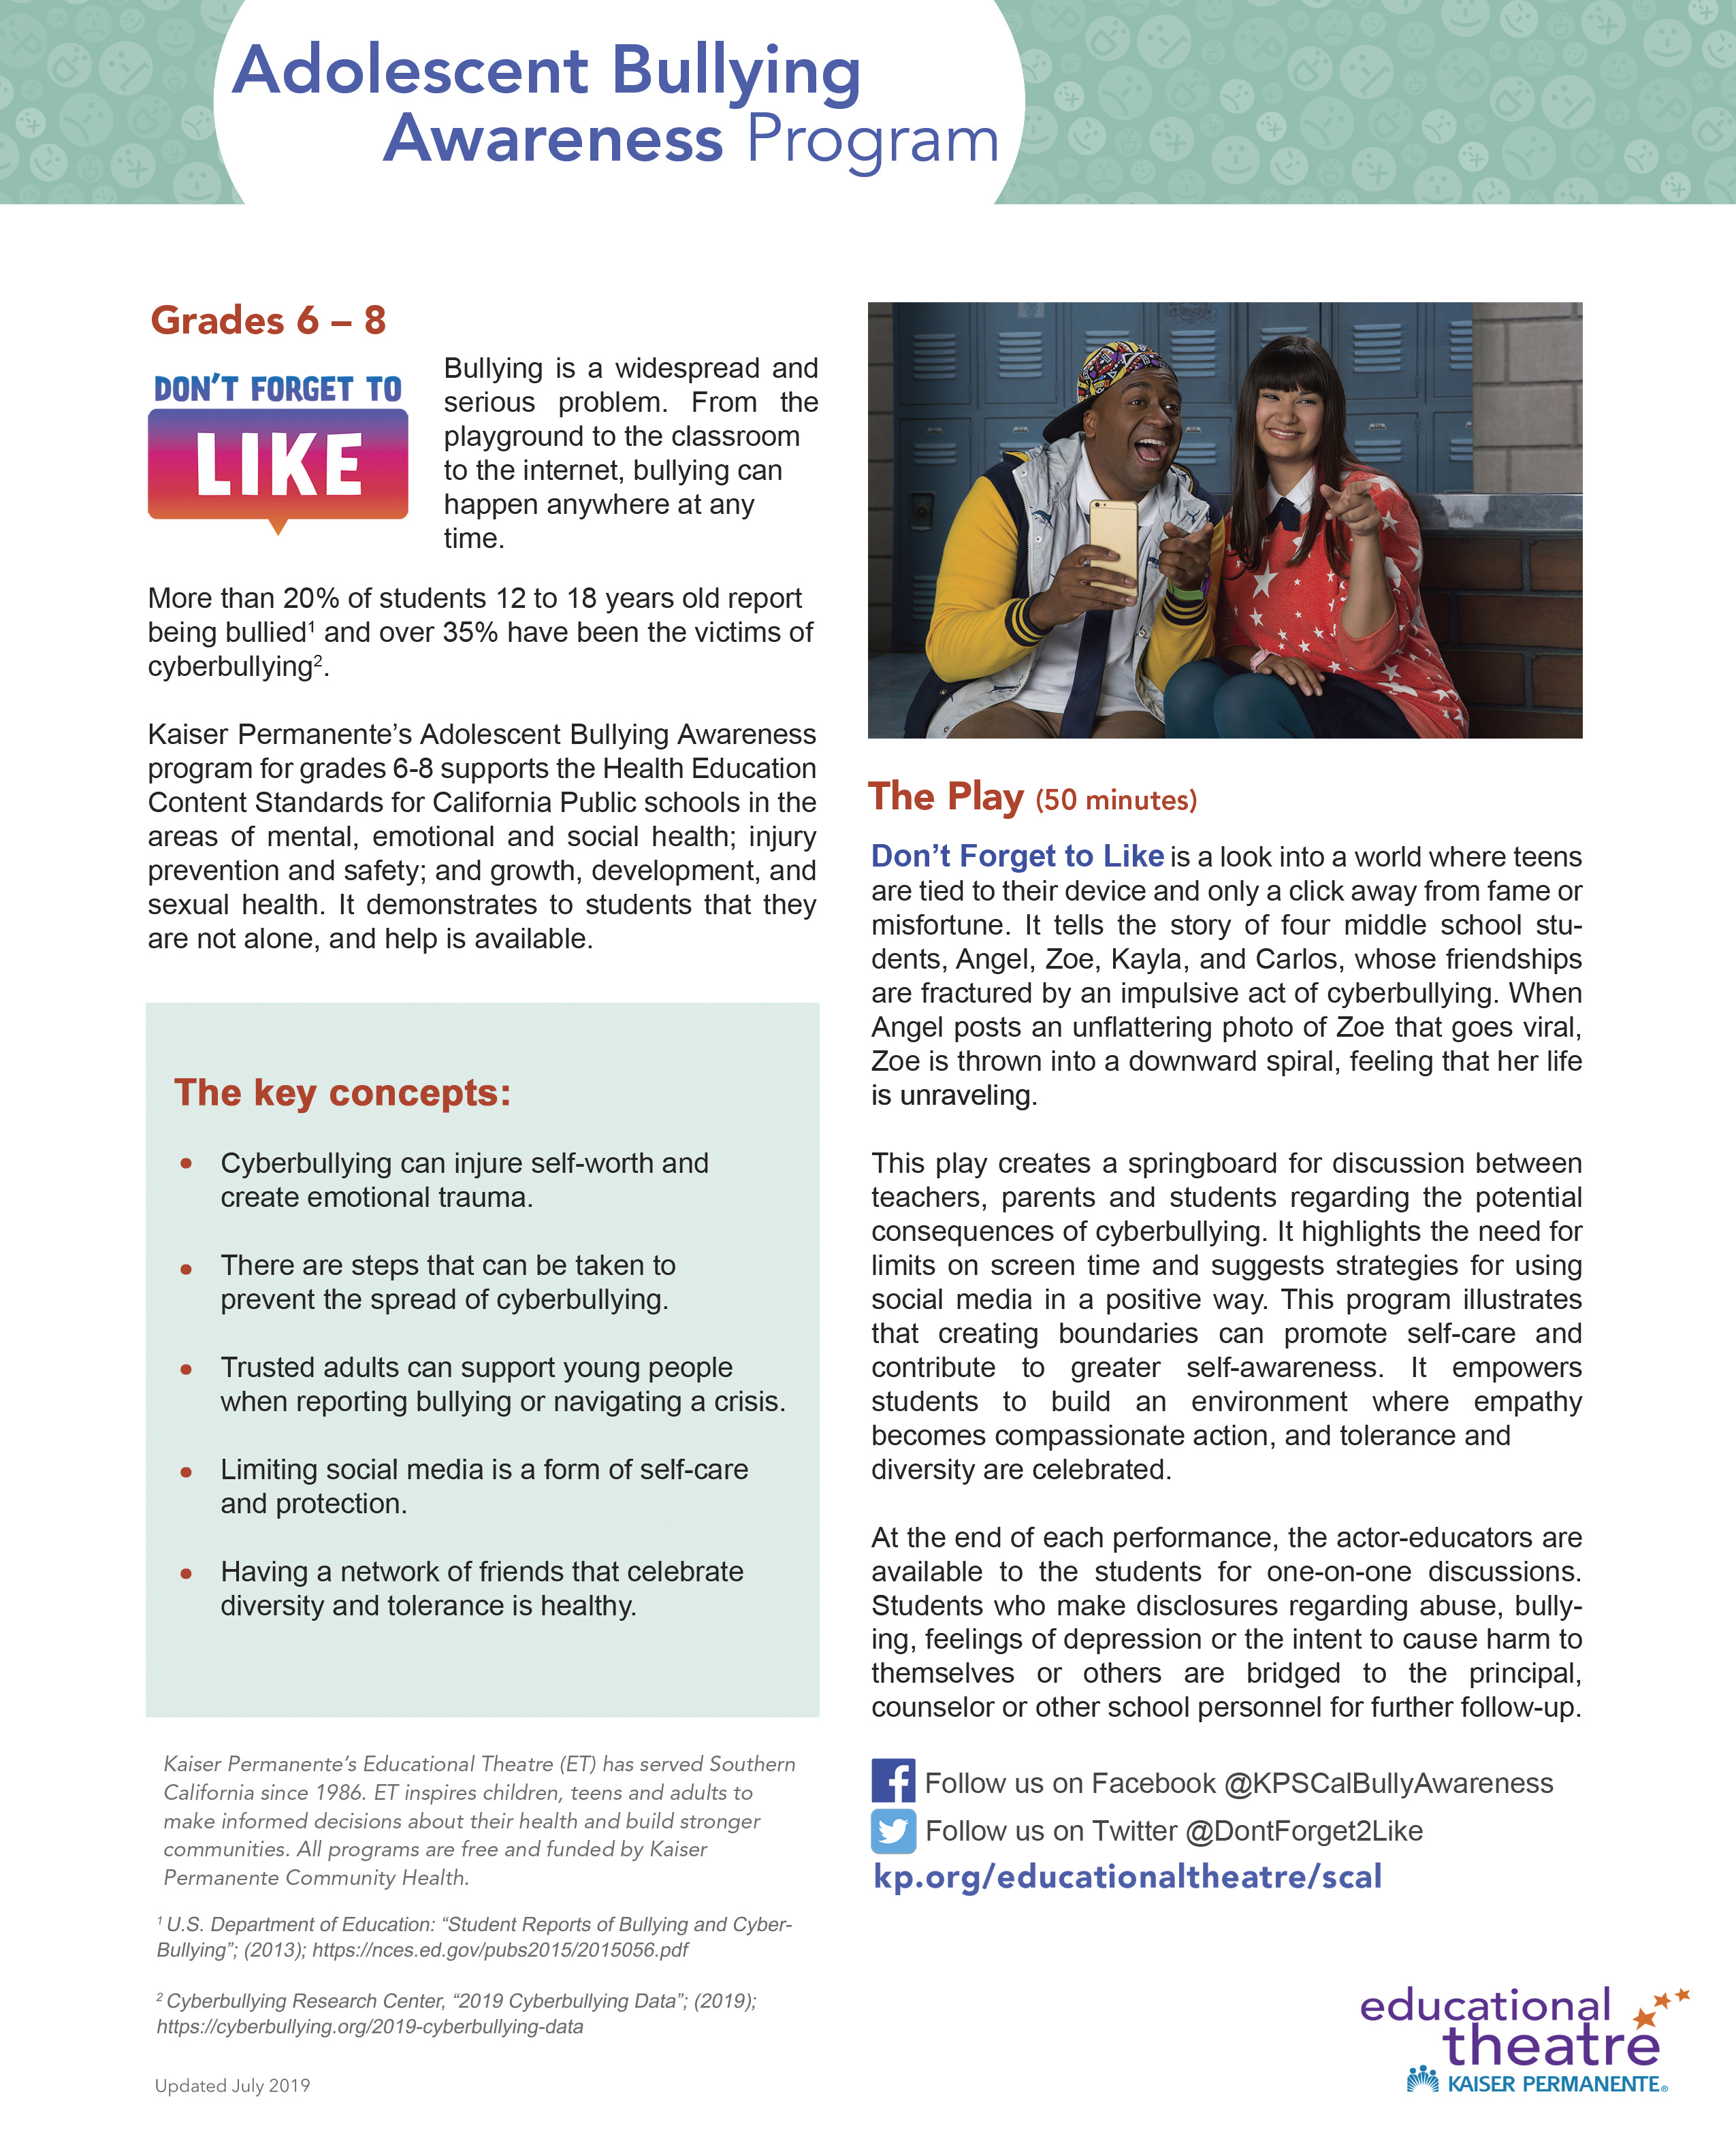 Adolescent-Bullying-Awareness-Information-Sheet.jpg